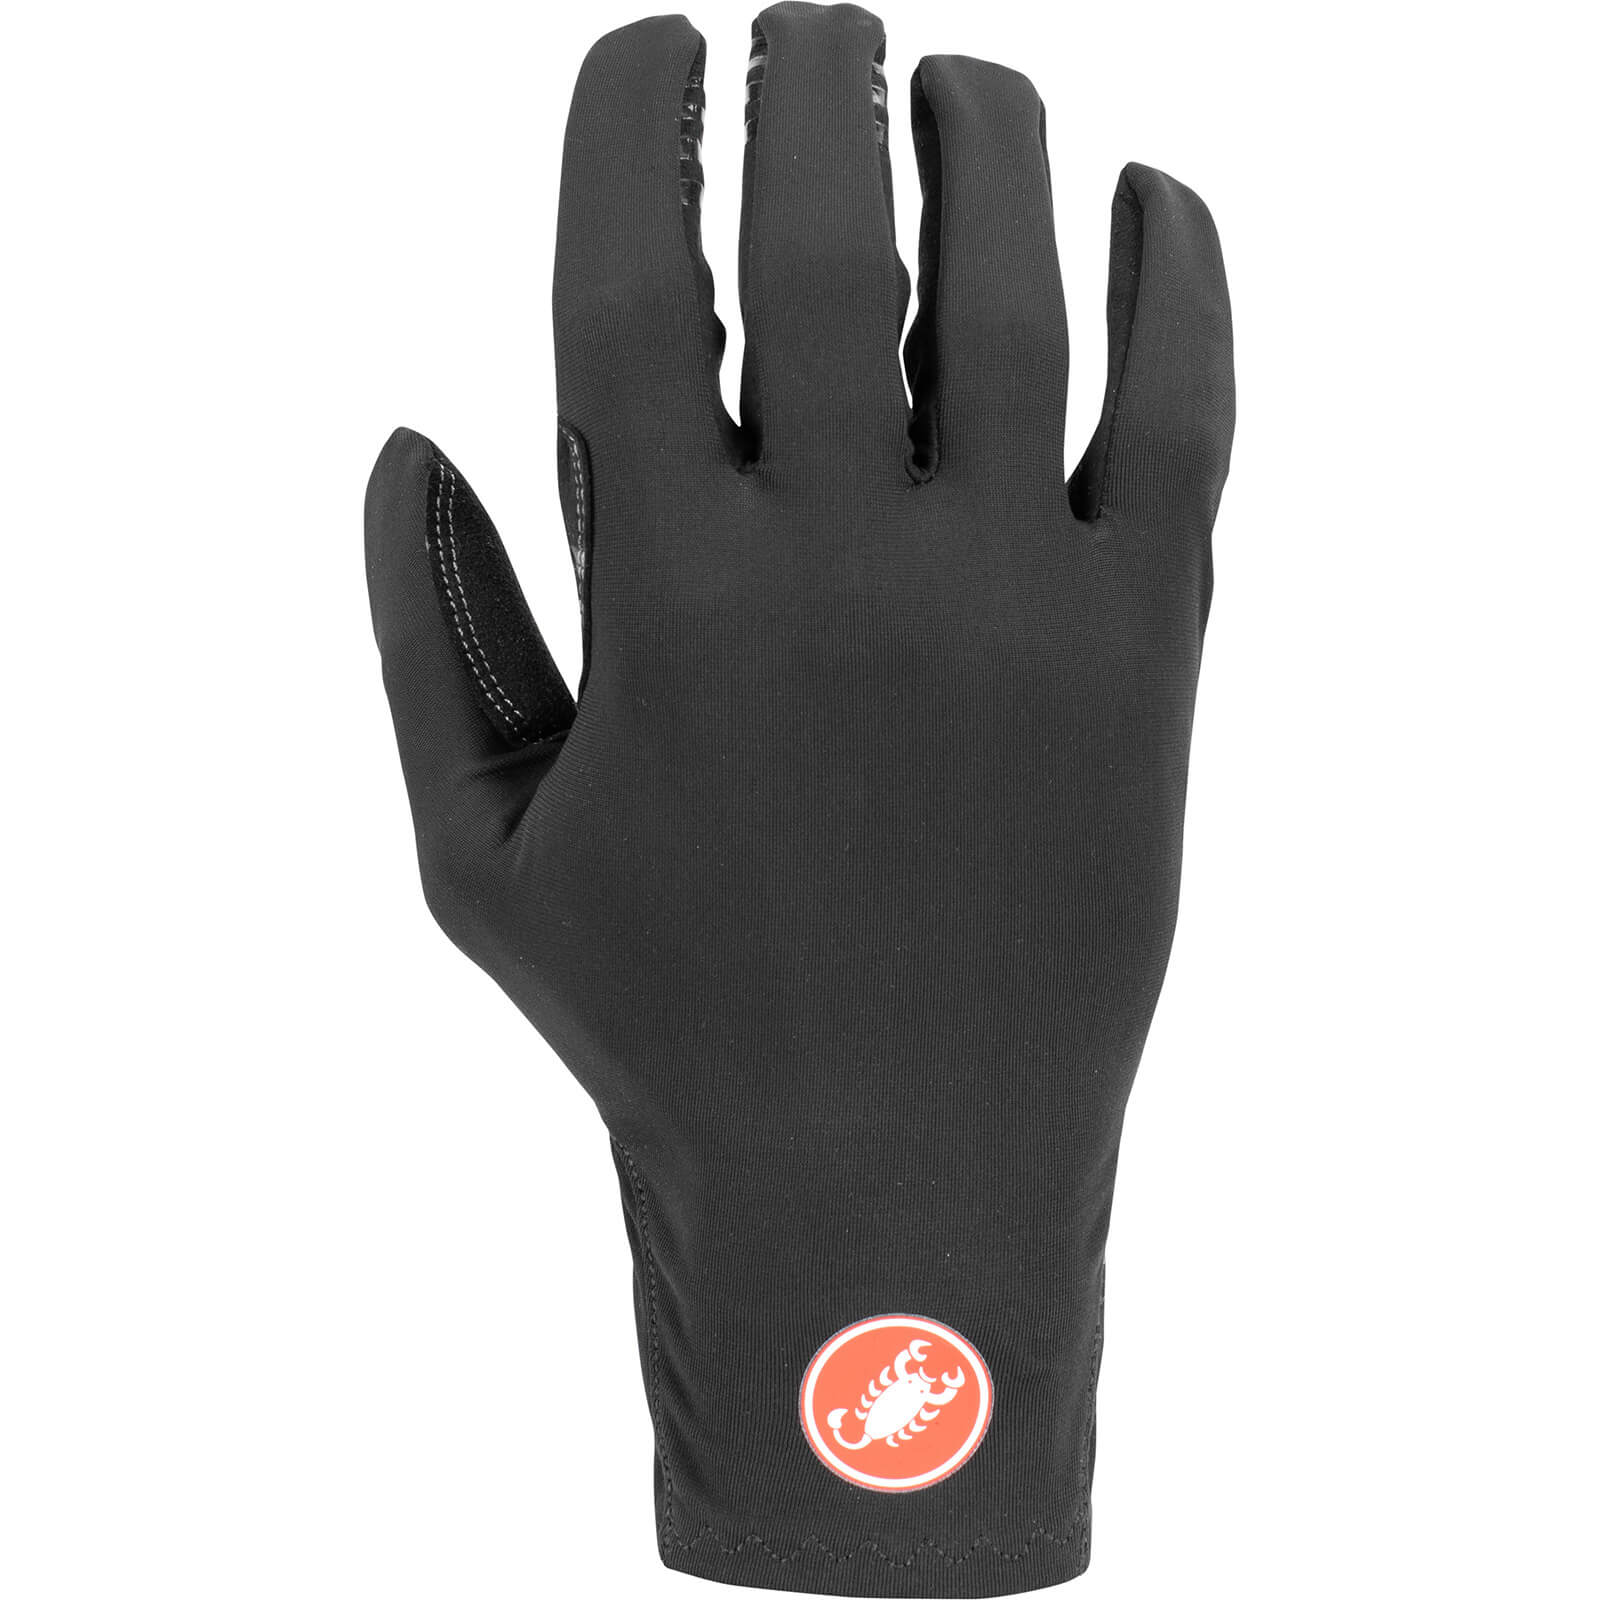 Castelli Lightness 2 Gloves - XL